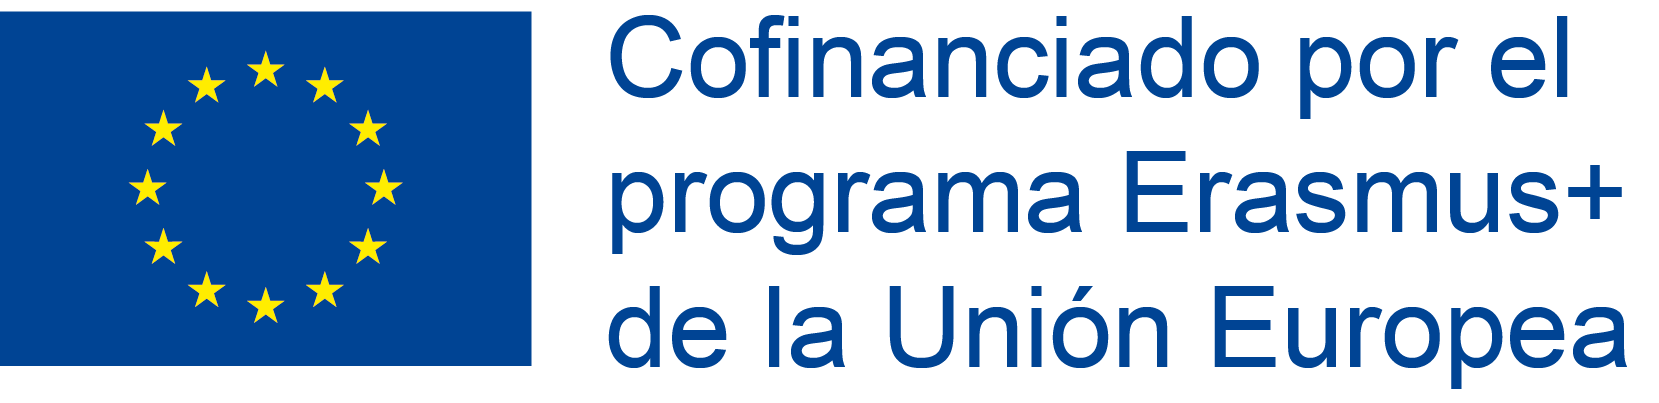 Logo Erasmus+_cofinanciado